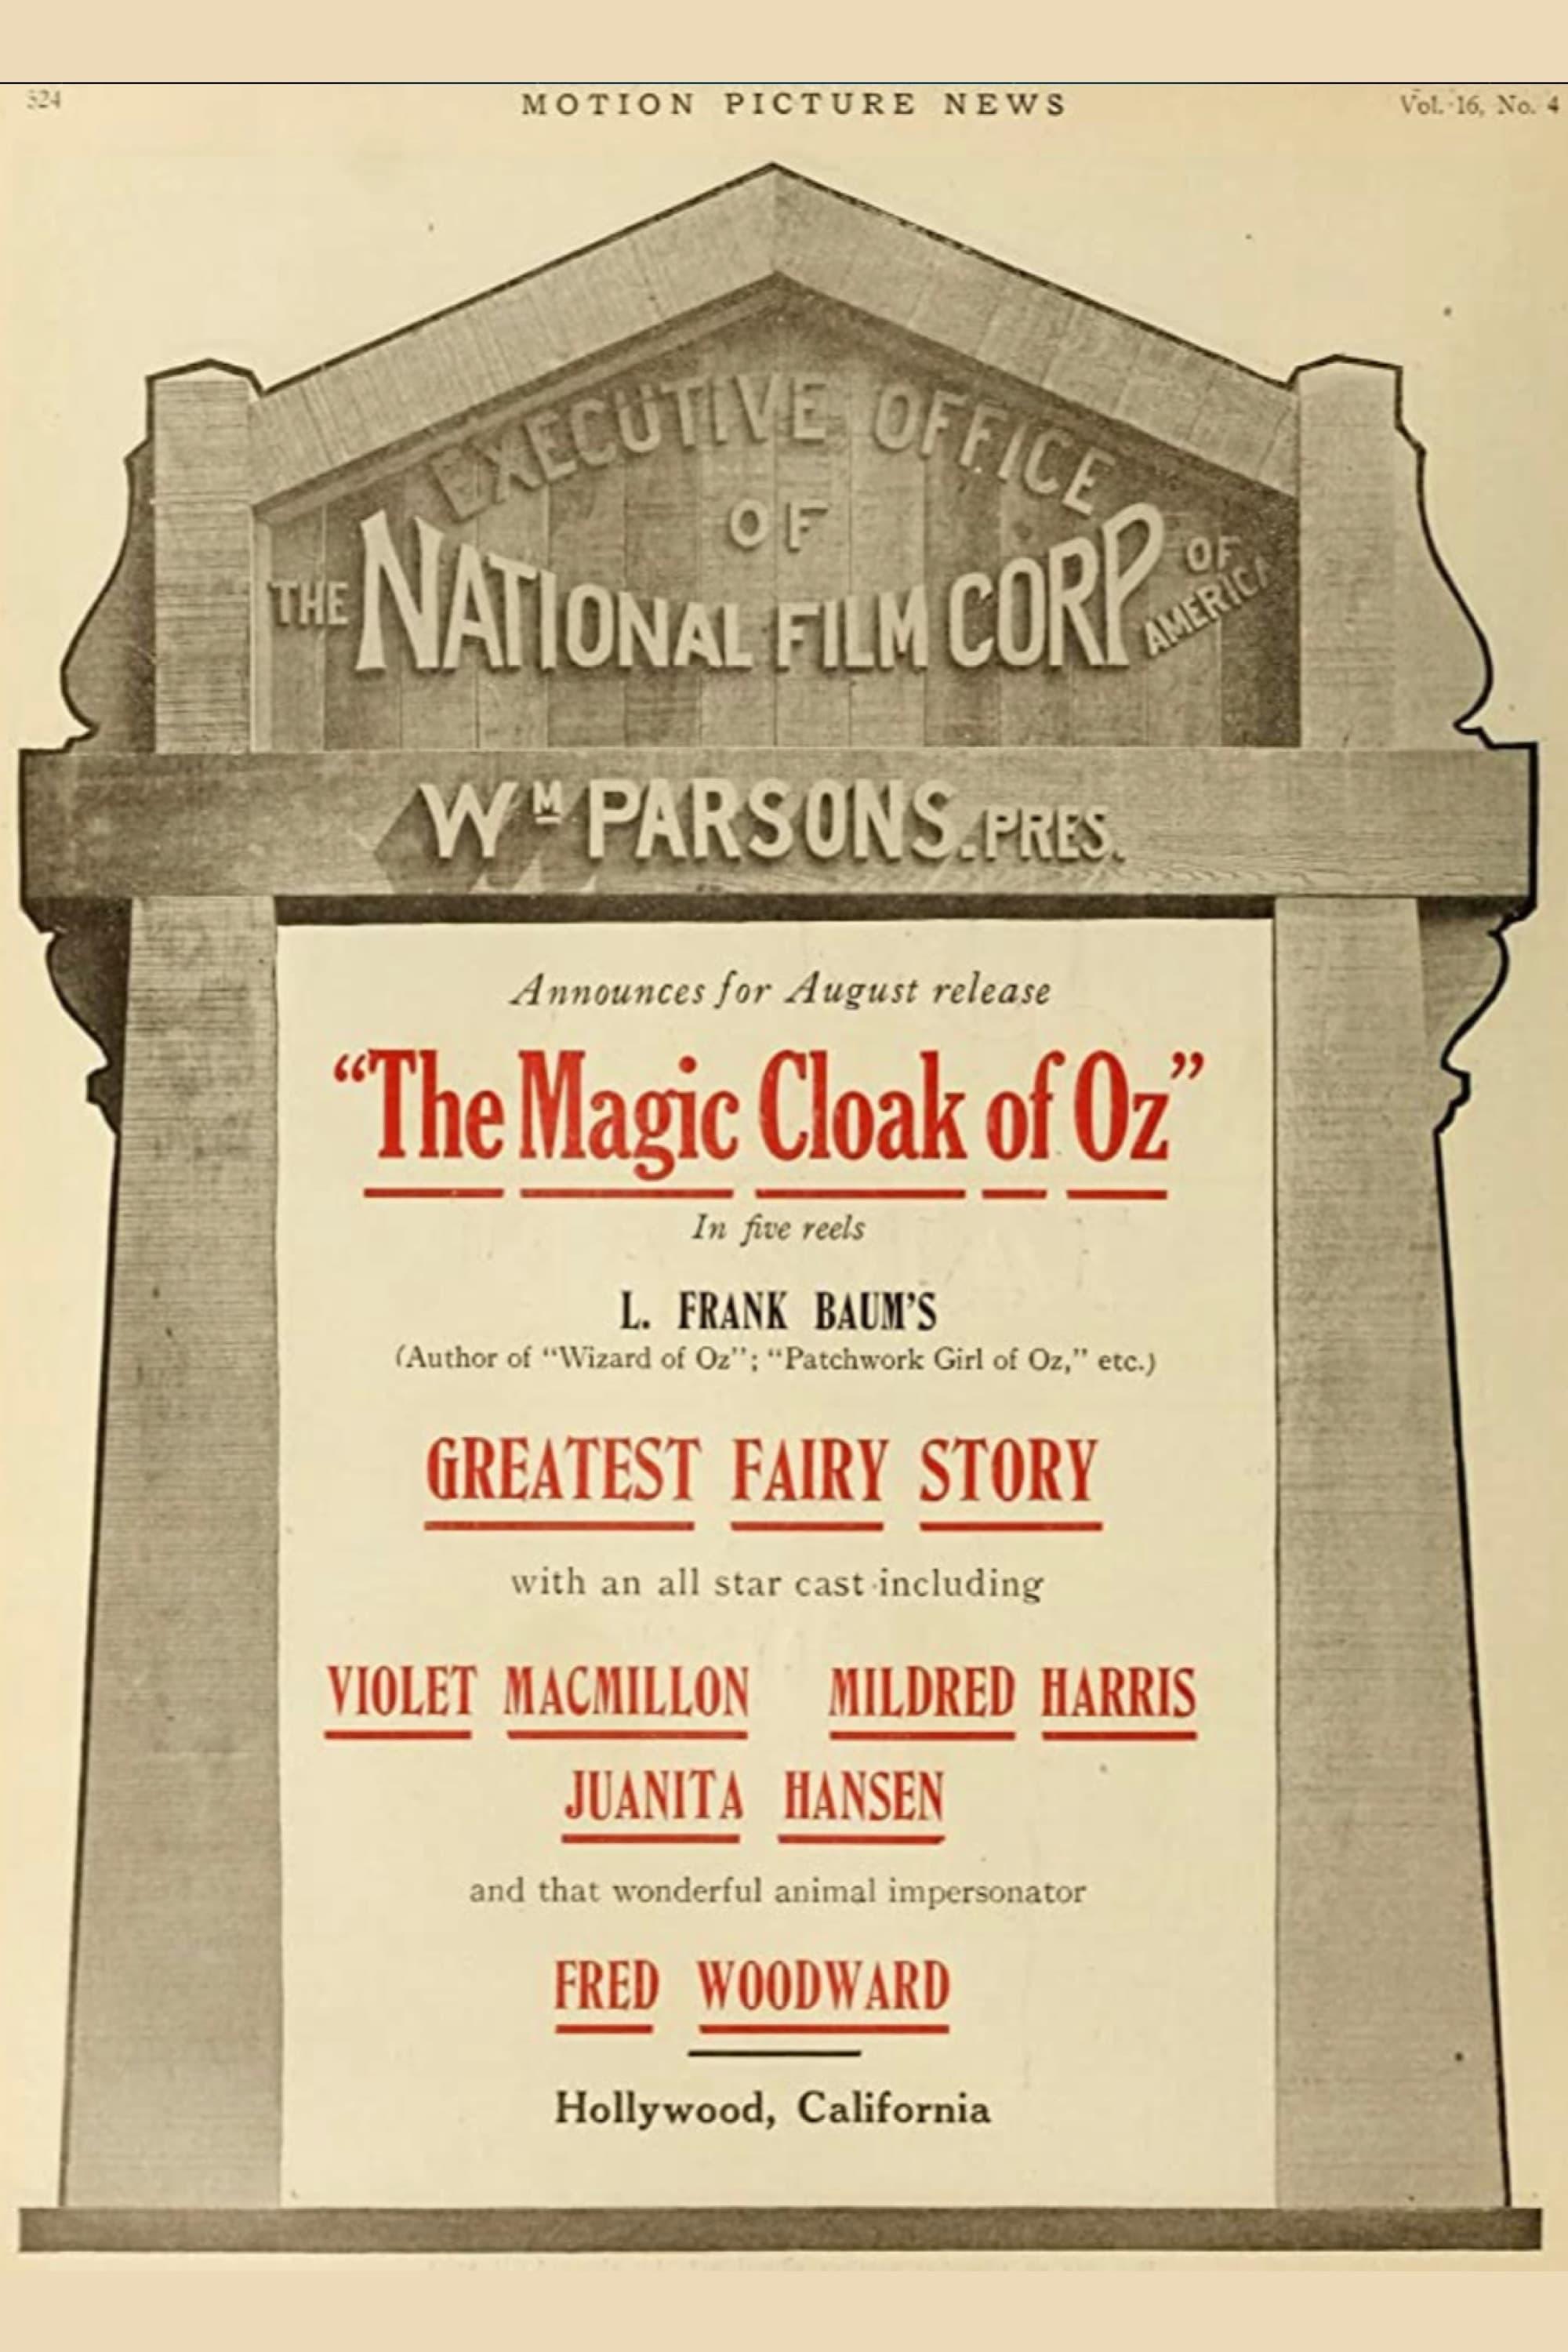 The Magic Cloak of Oz poster